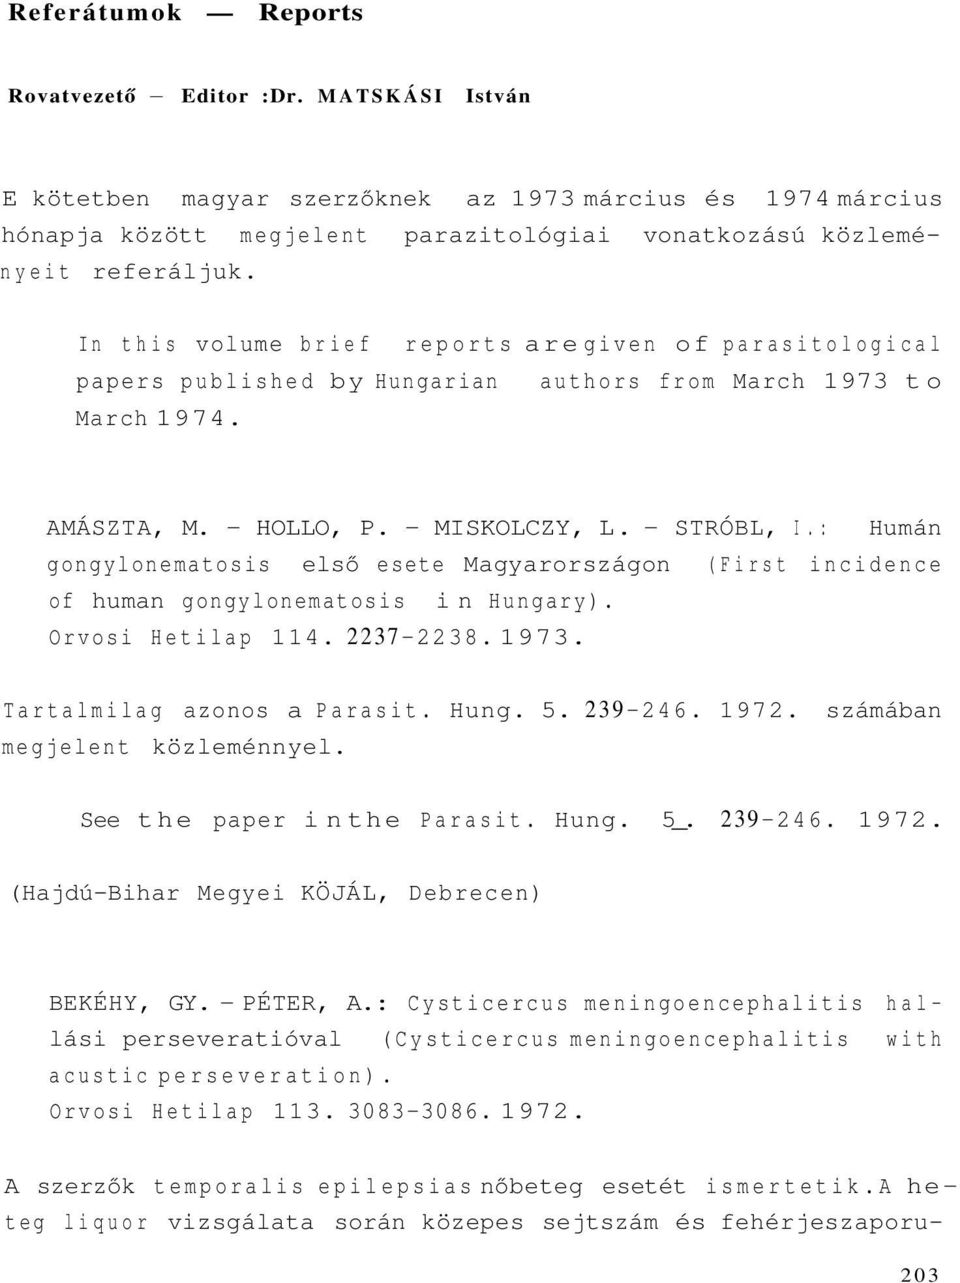 : Humán gongylonematosis első esete Magyarországon (First incidence of human gongylonematosis in Hungary). Orvosi Hetilap 114. 2237-2238. 1973. Tartalmilag azonos a Parasit. Hung. 5. 239-246. 1972.